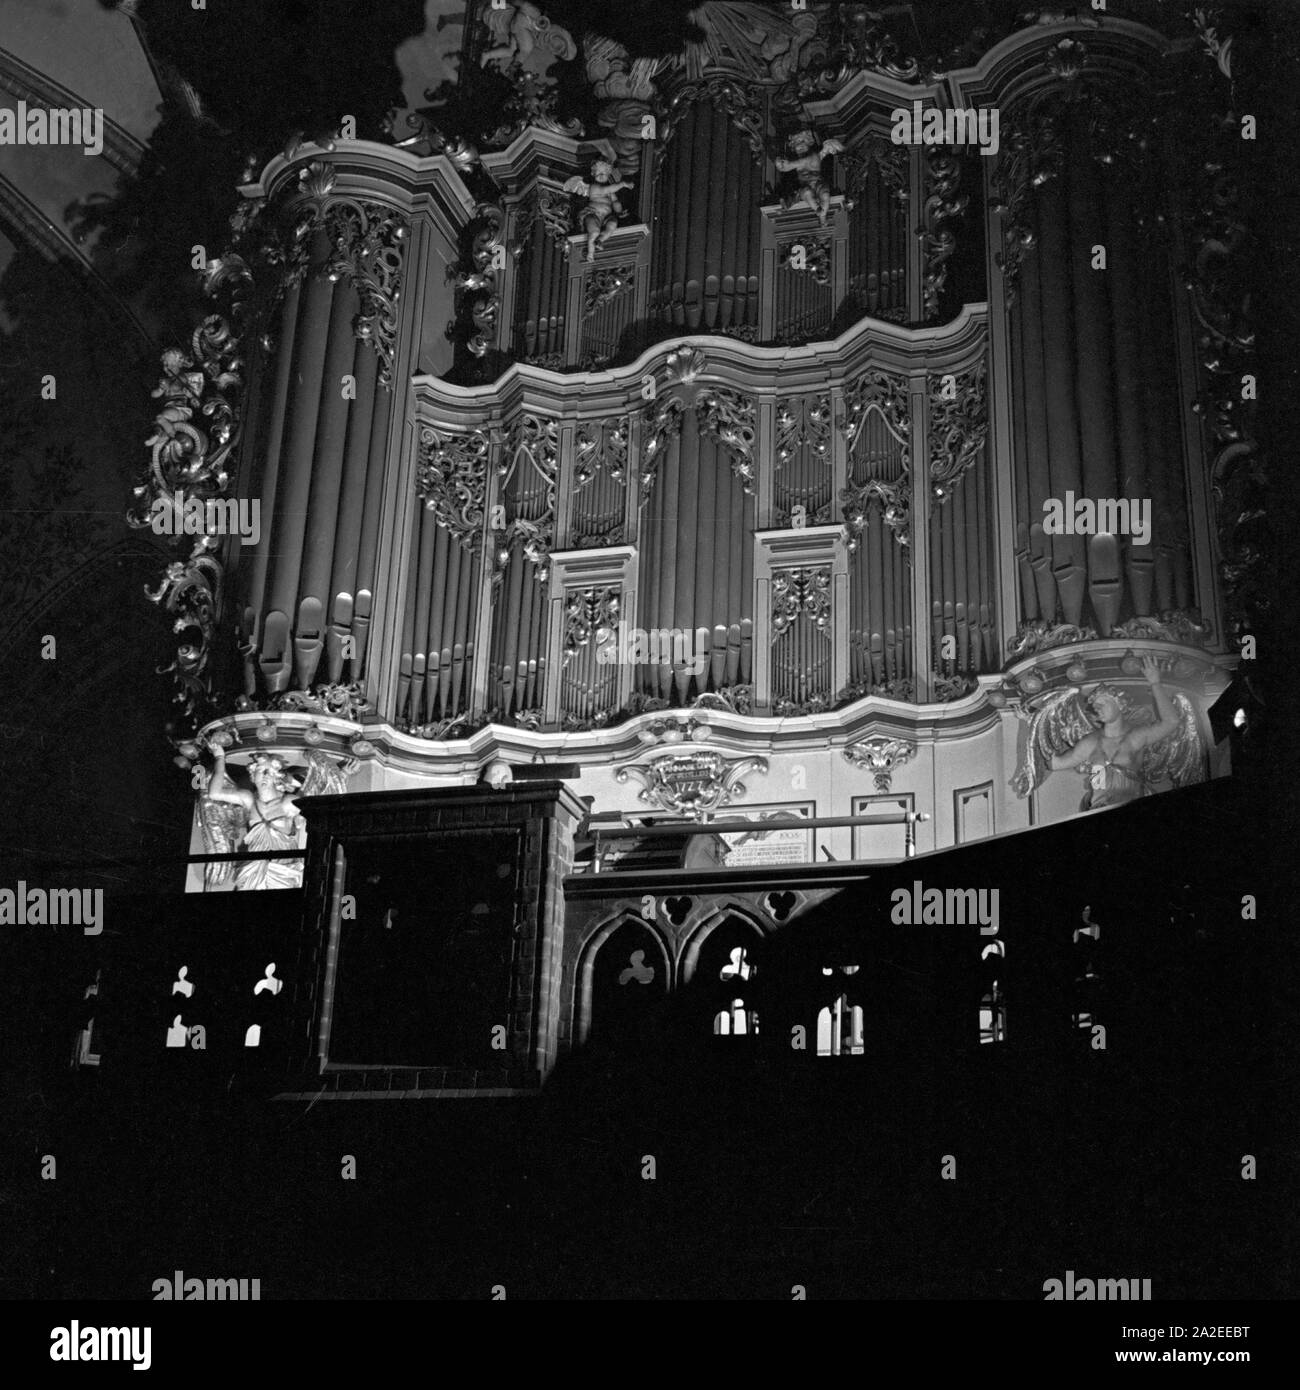 Die Orgel erklingt zum vorweihnachtlichen Adventskonzert Kirche in Deutschland, 1930er Jahre. L'organe jouant la musique d'avant Noël à l'église en Allemagne, années 30. Banque D'Images